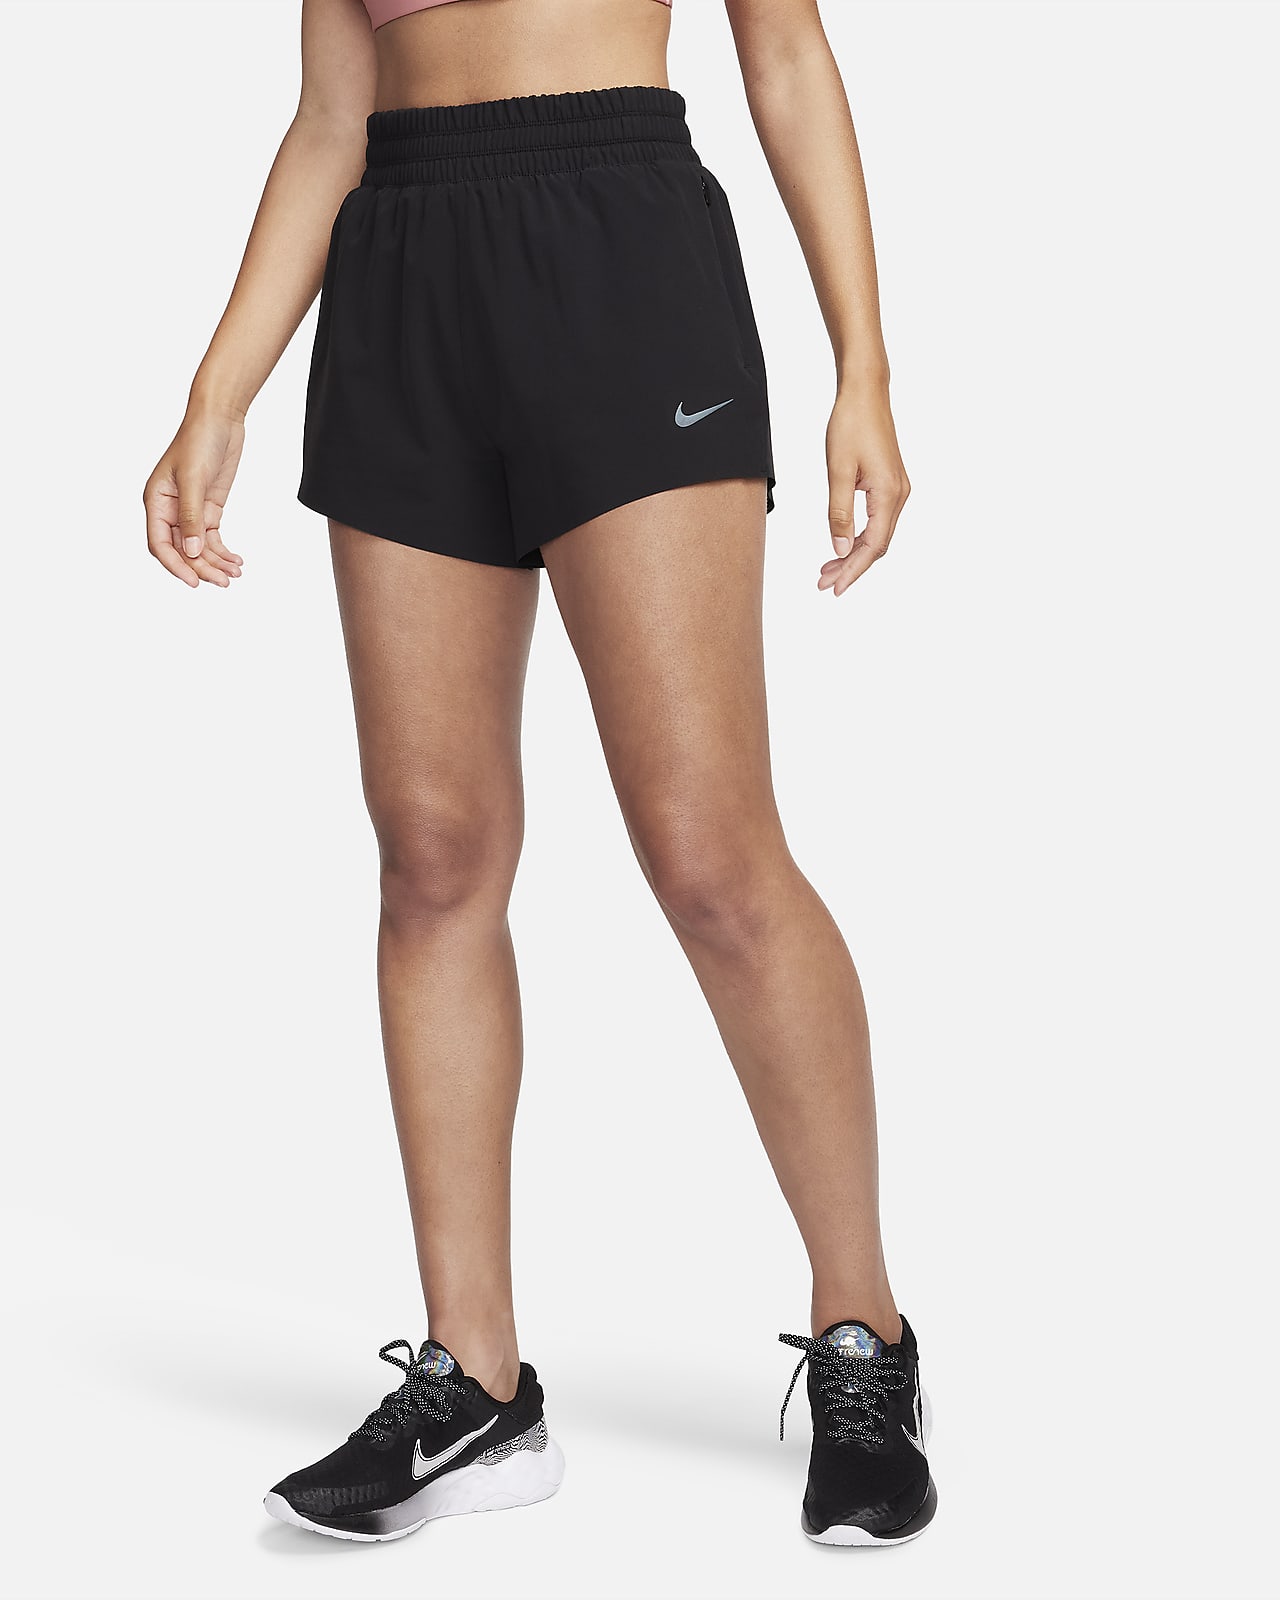 Nike Dri-FIT Running Division 8 cm-es, magas derekú, bélelt női futórövidnadrág zsebekkel